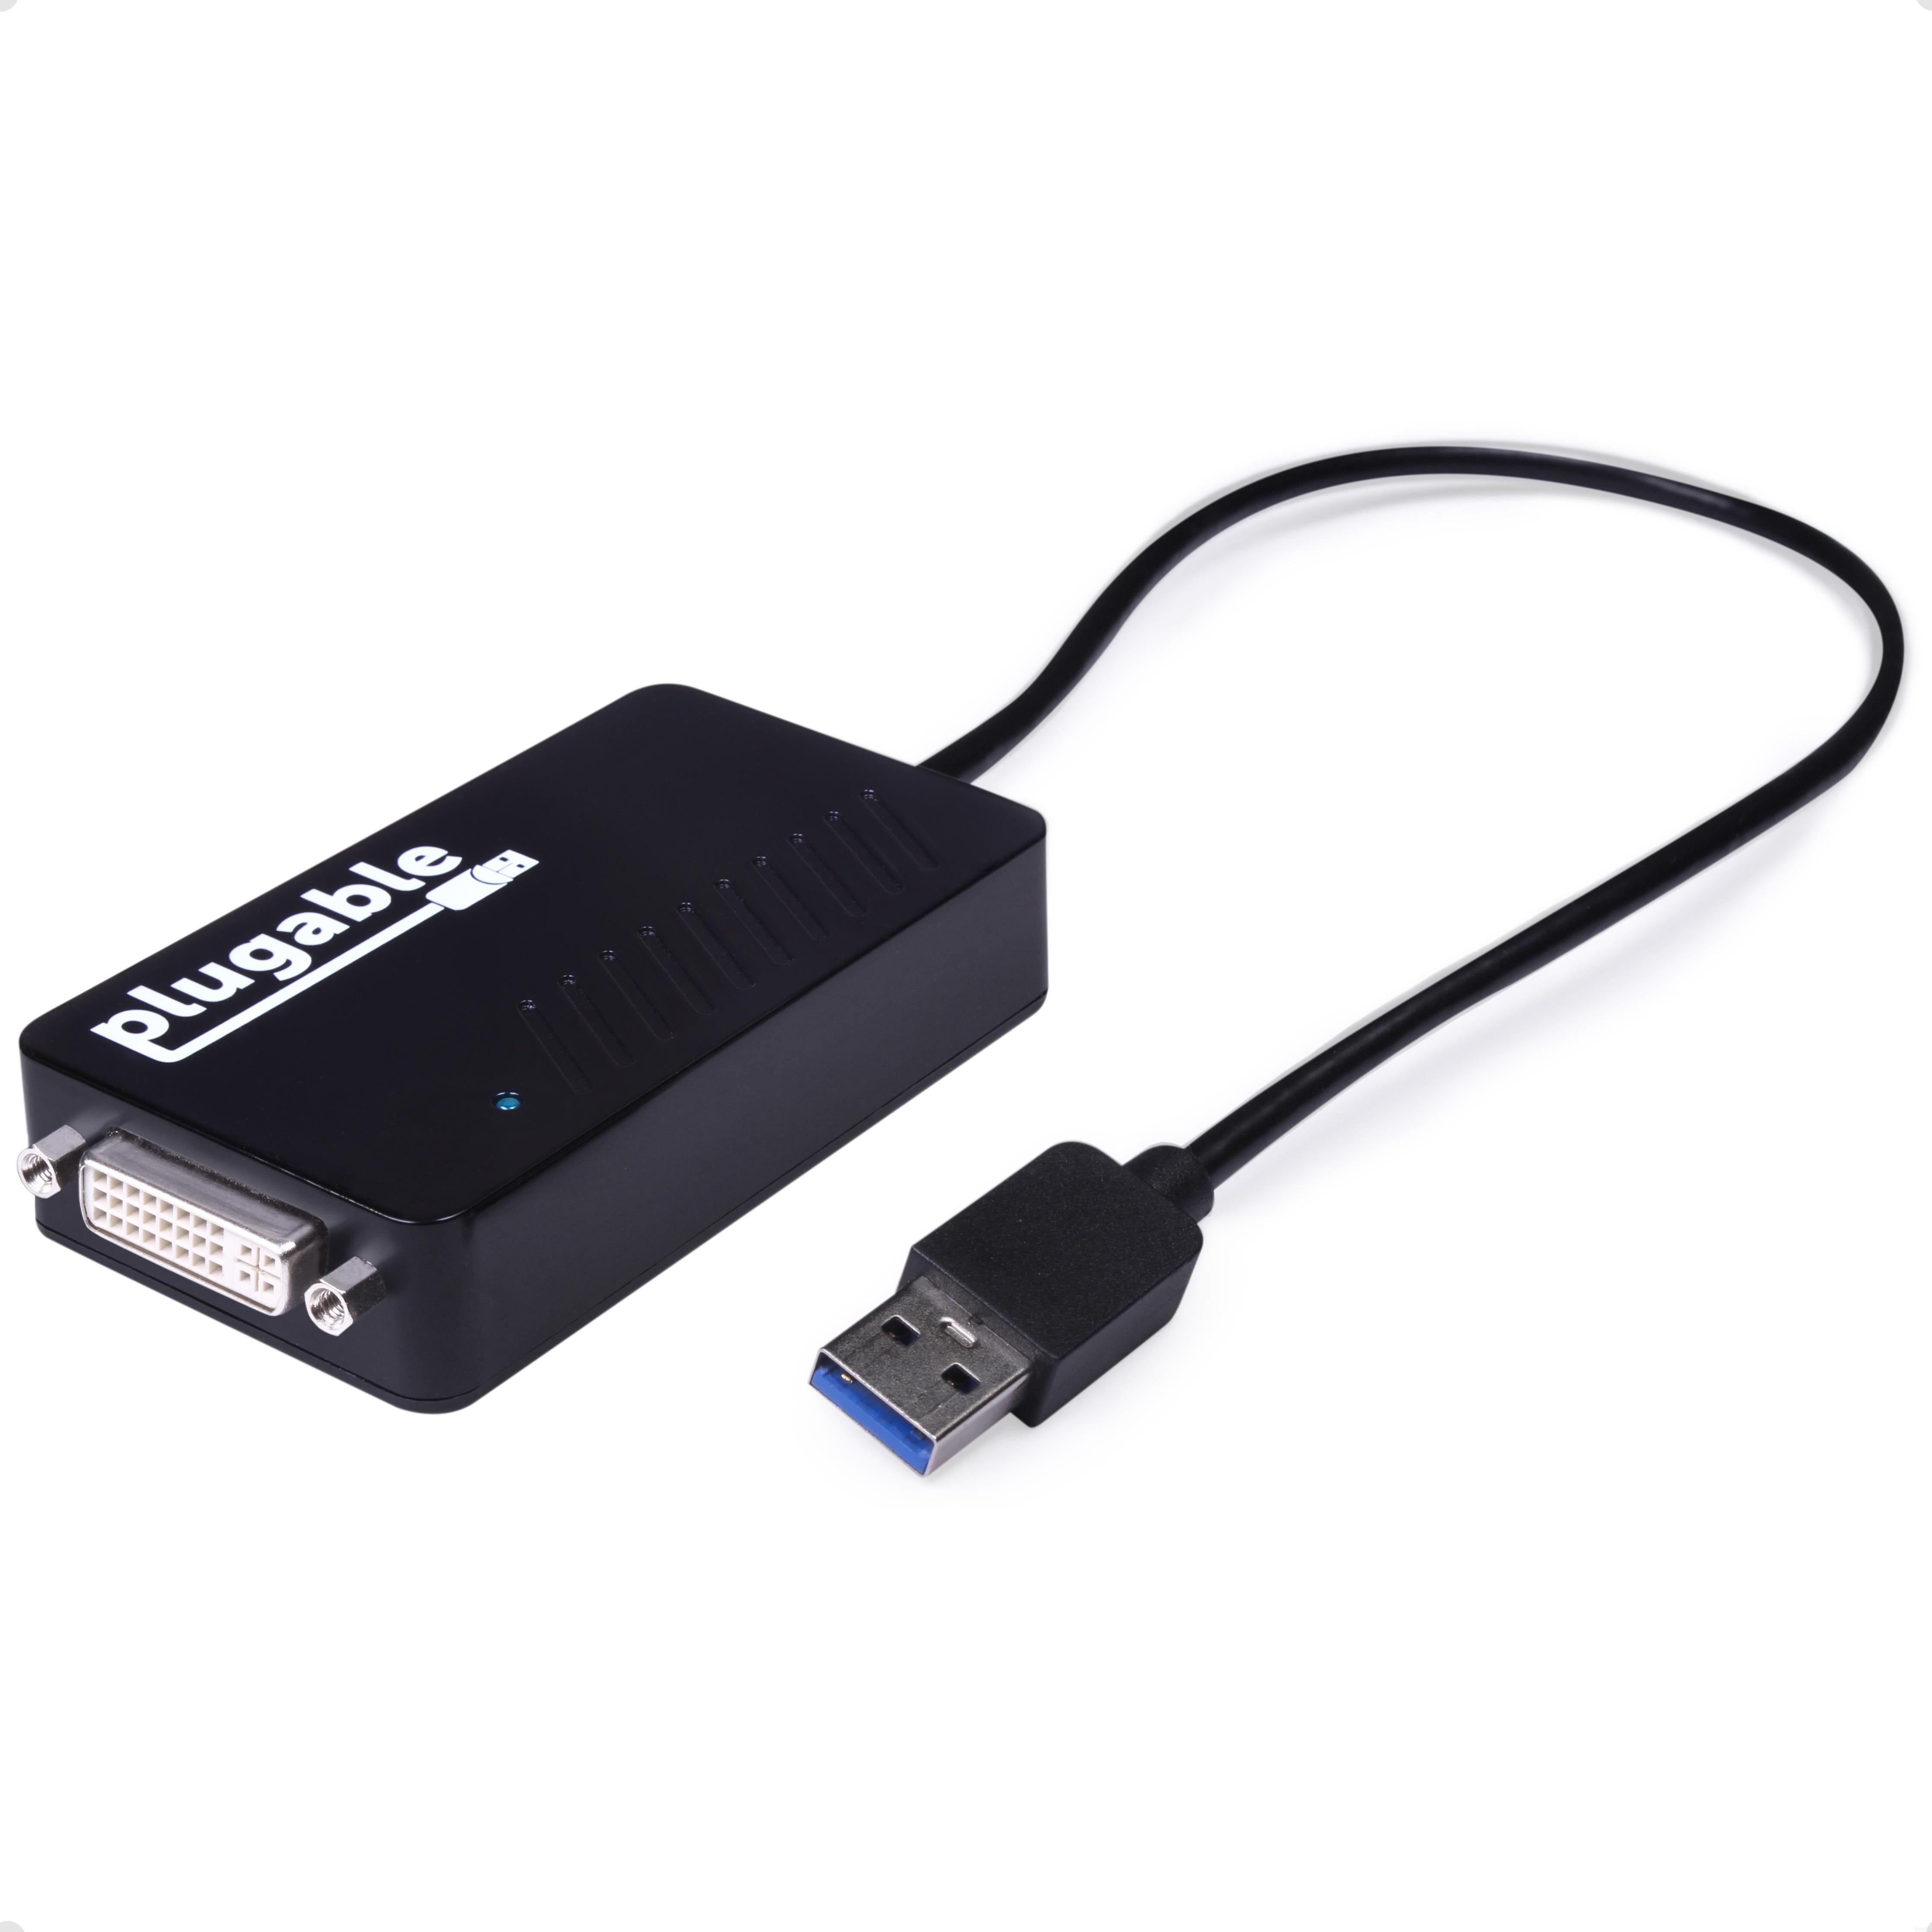 Plugable USB 3.0 HDMI/DVI/VGA Adapter for Multiple Monitors – Technologies